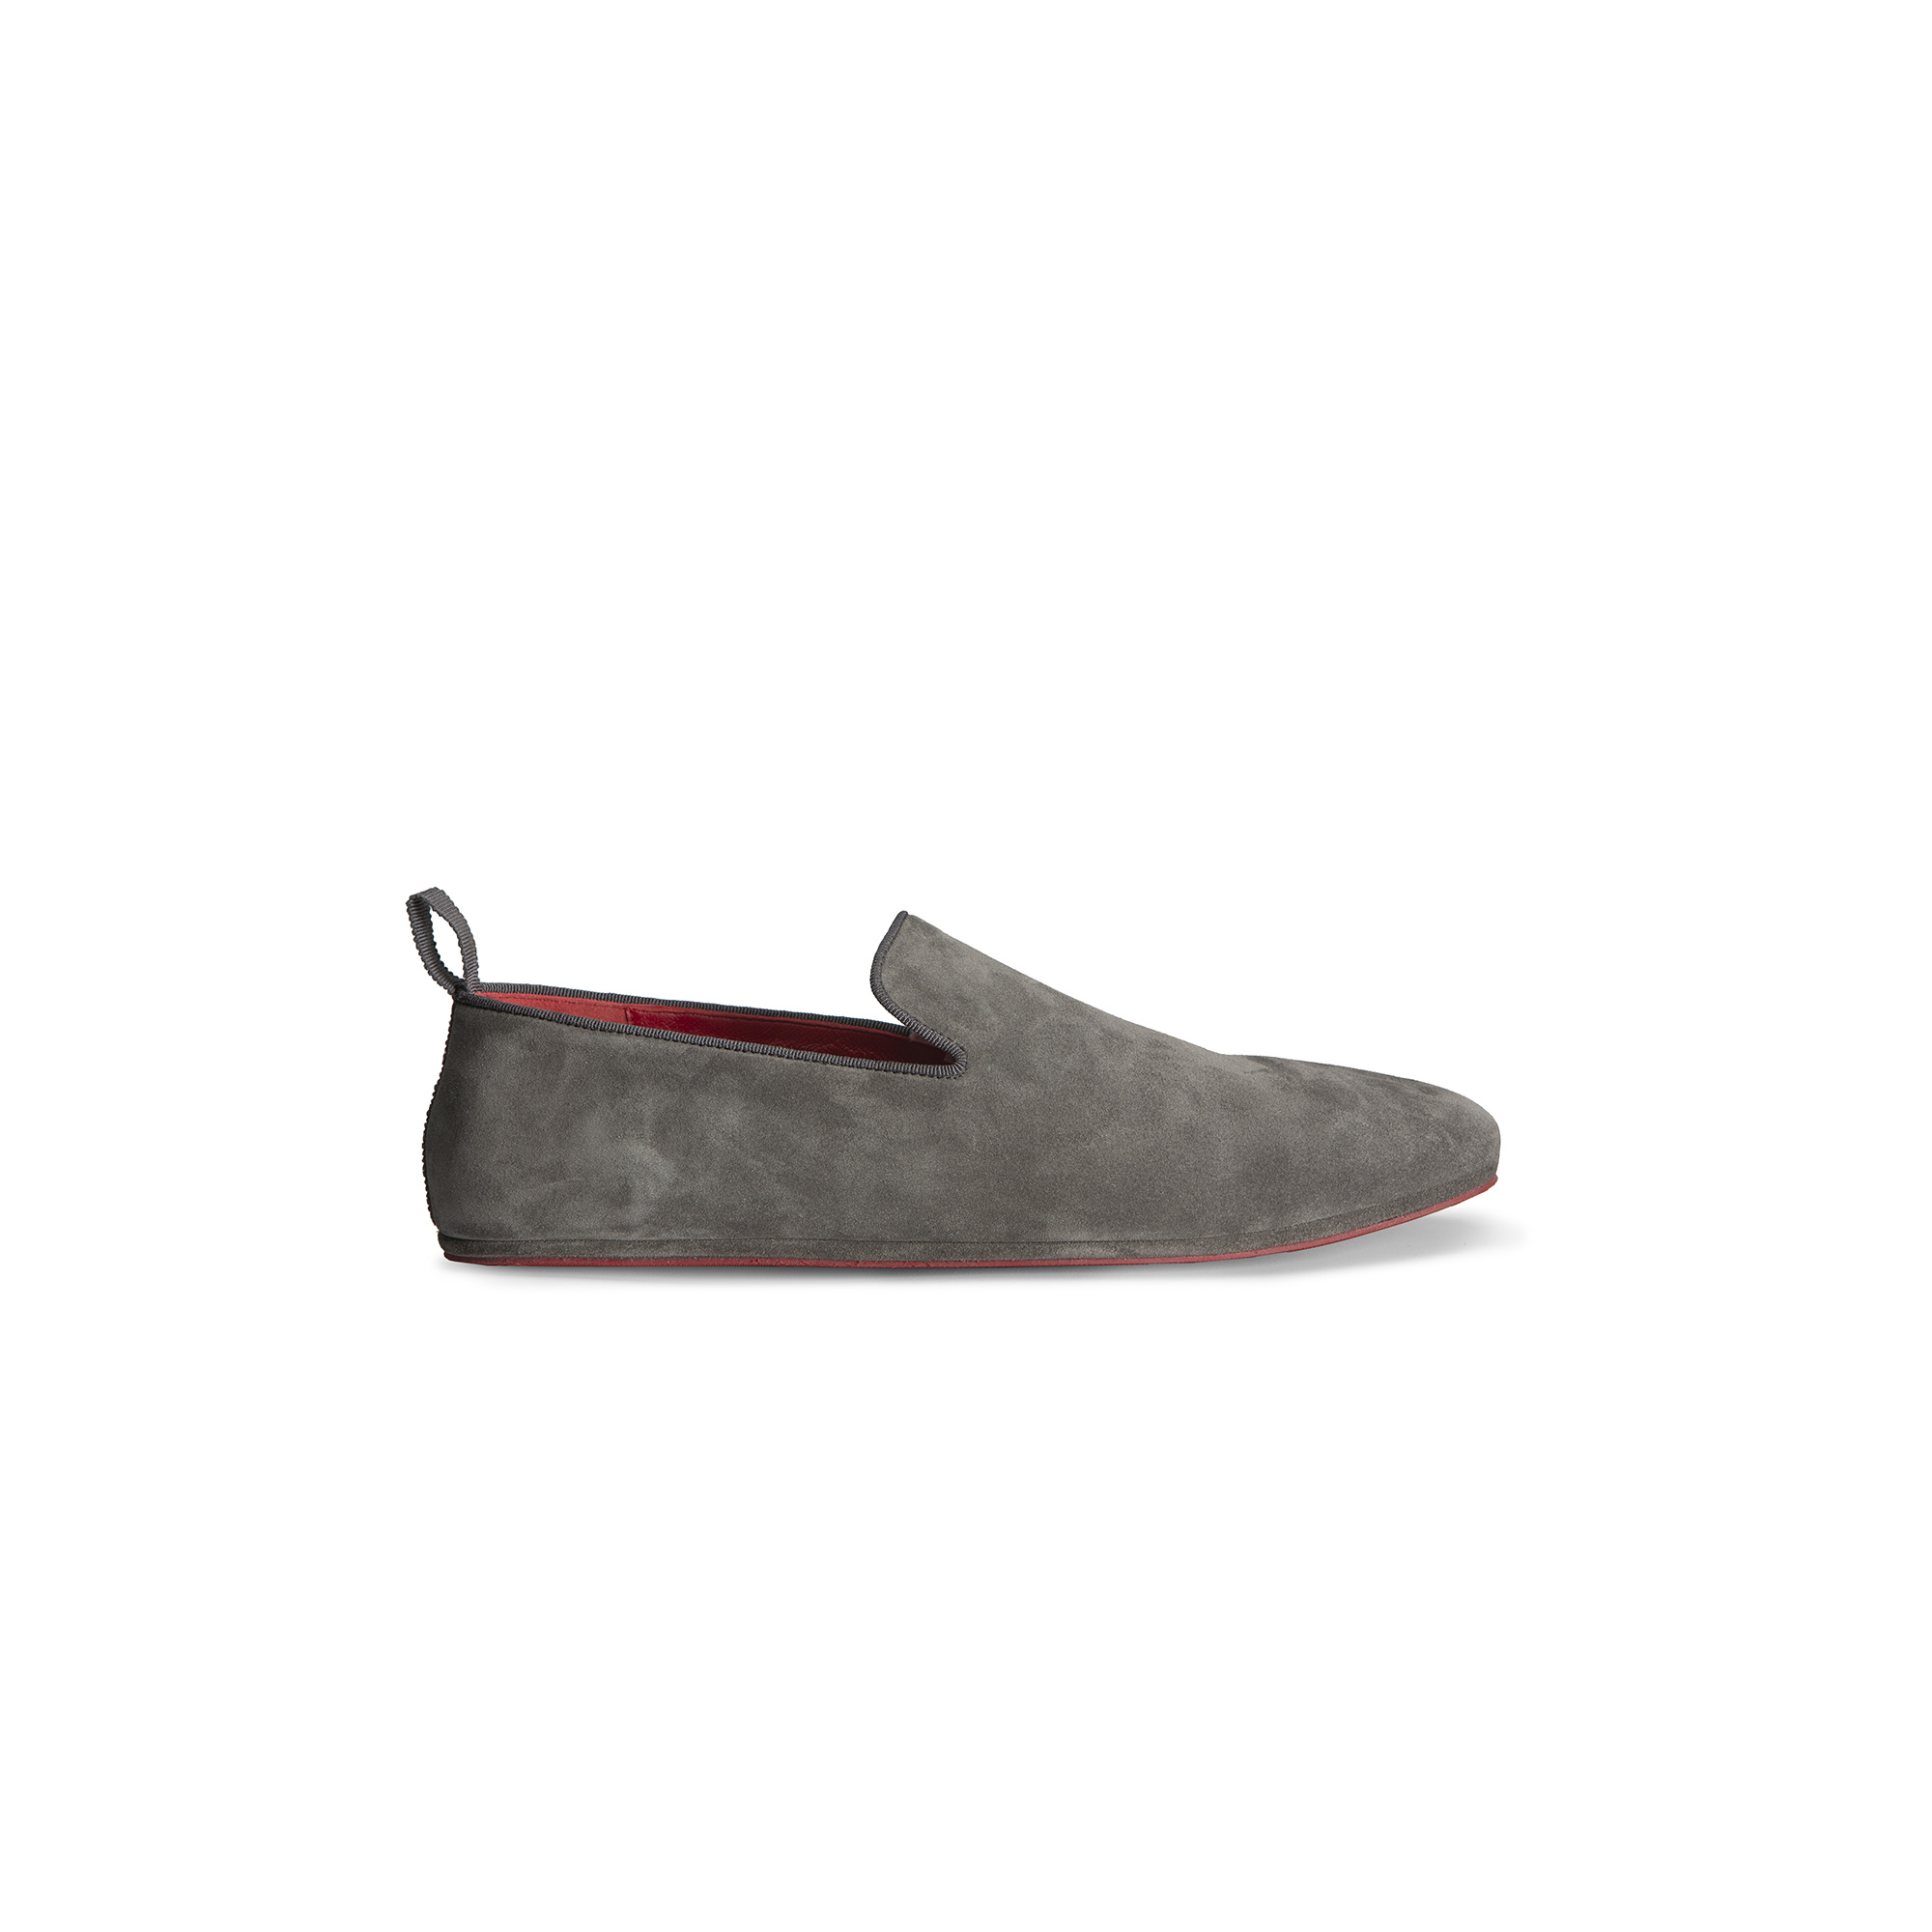 Pantofola chiusa interno velour carbone - Farfalla italian slippers